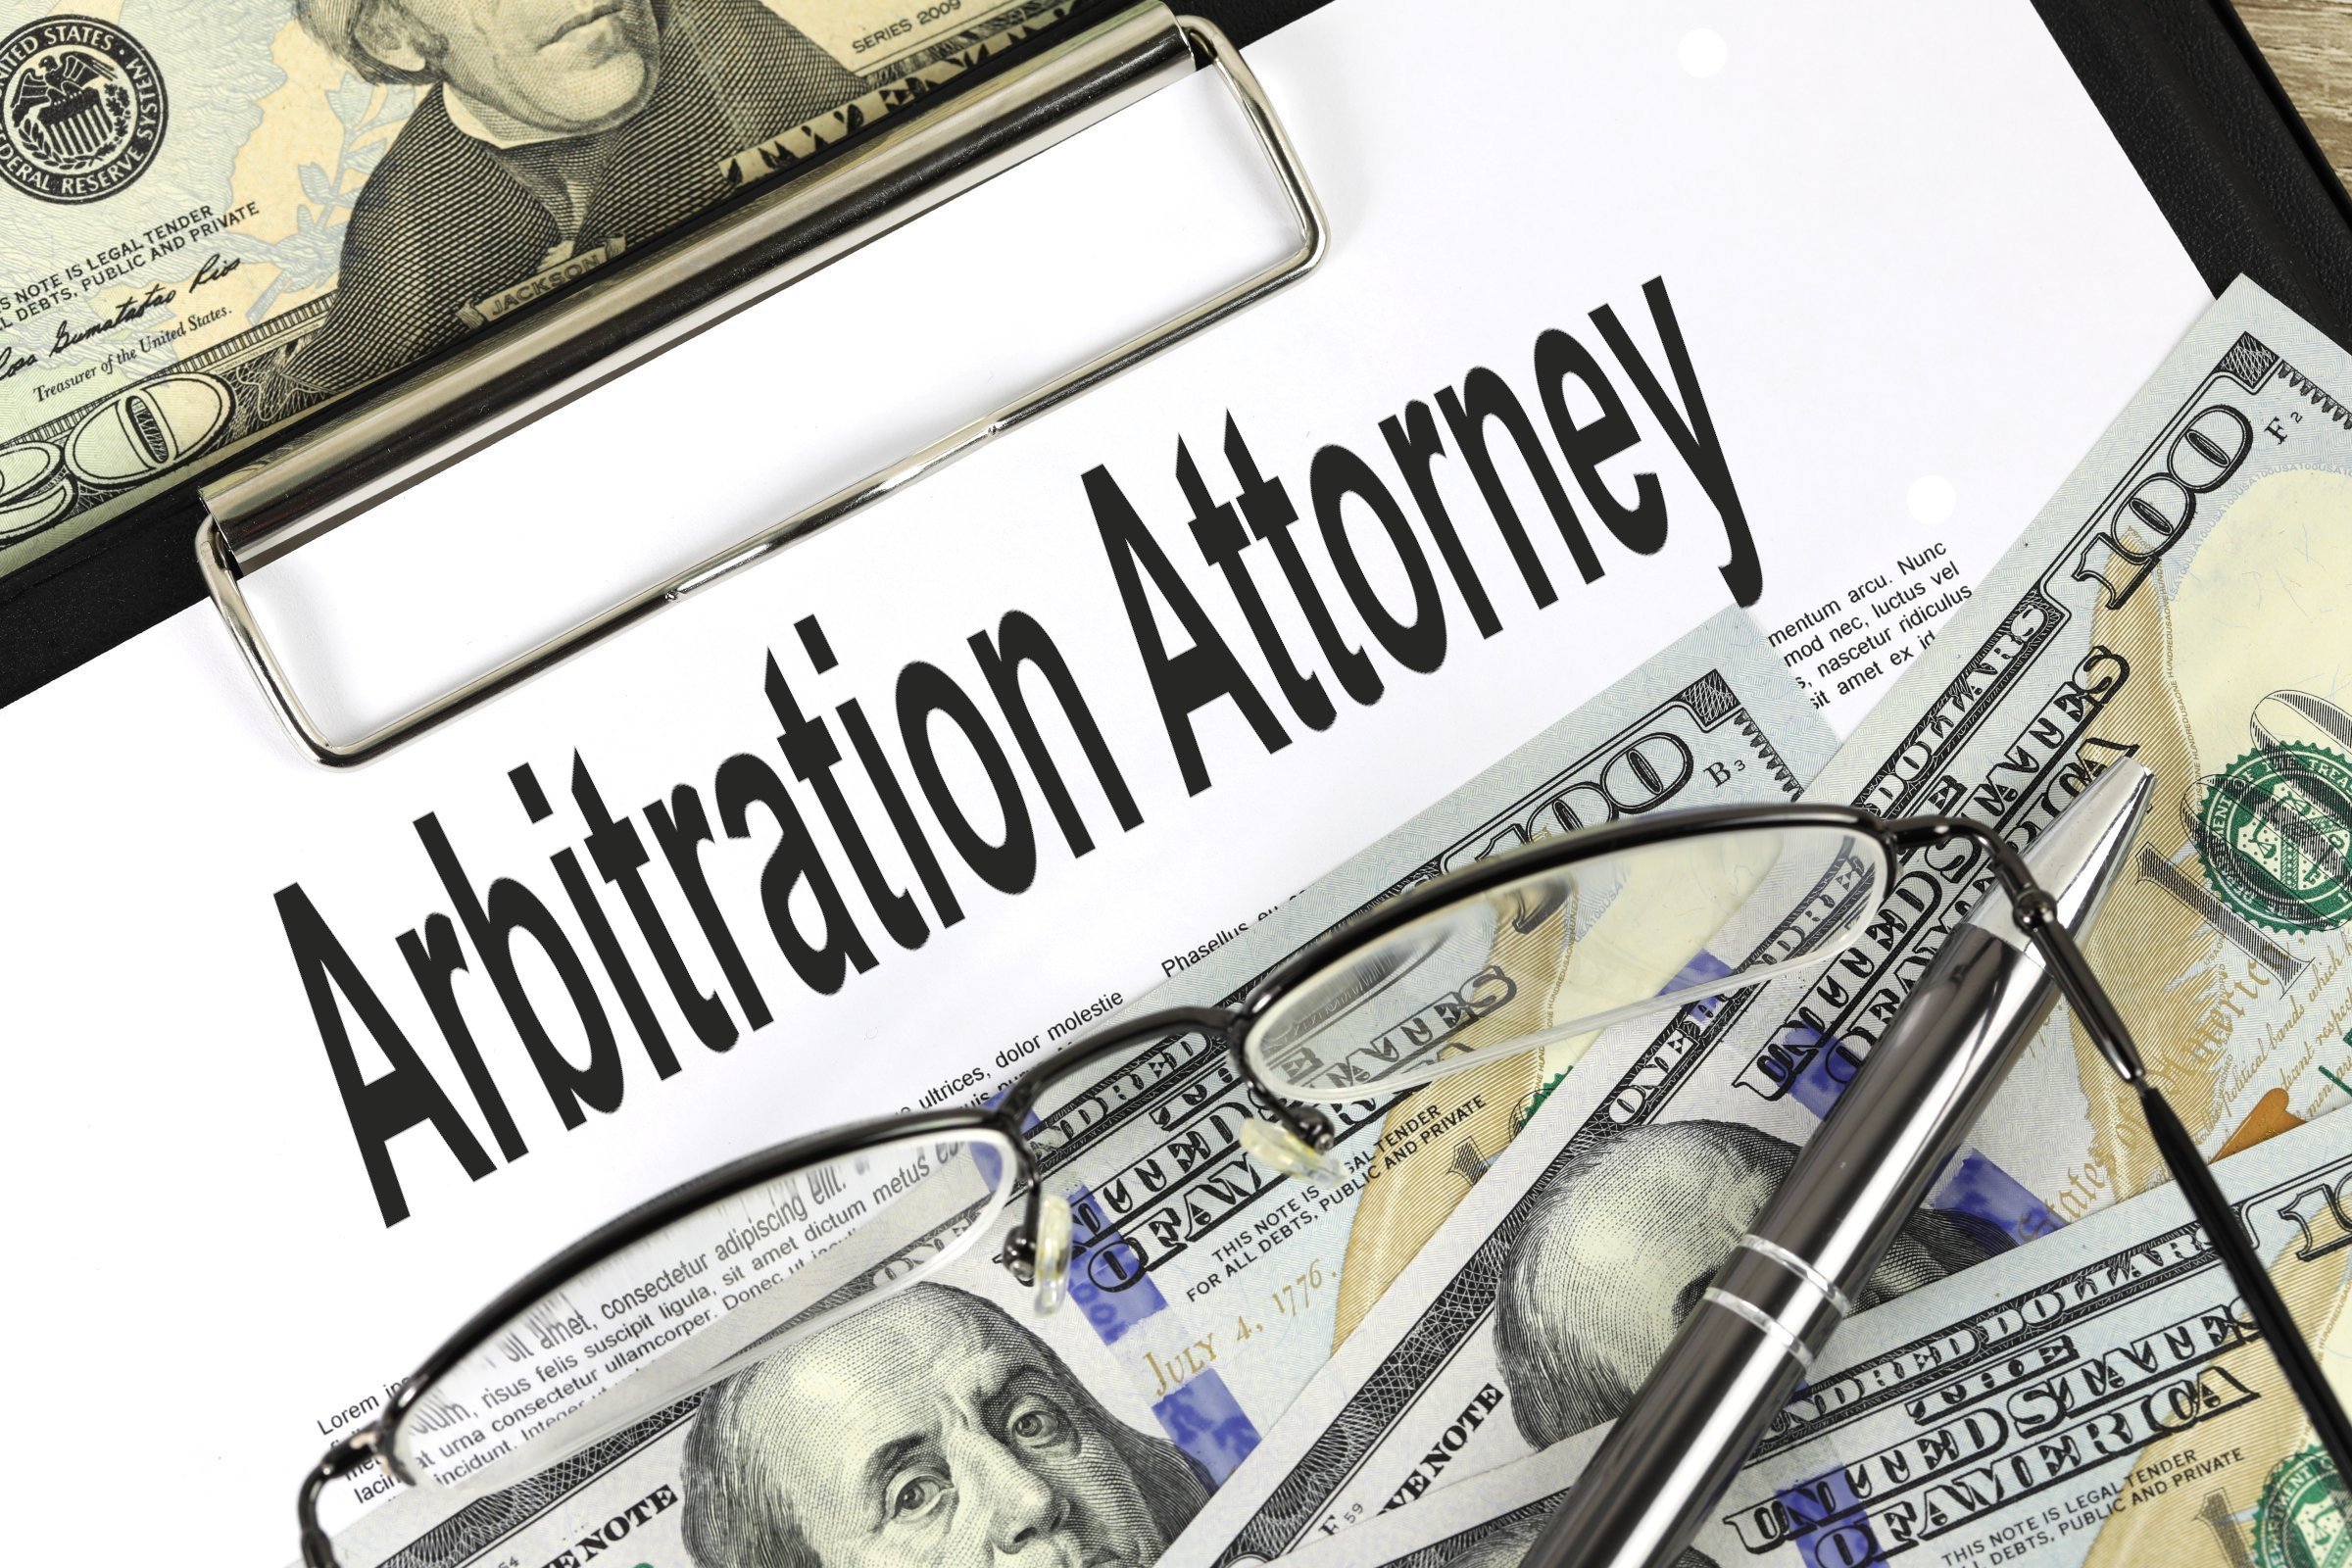 arbitration attorney